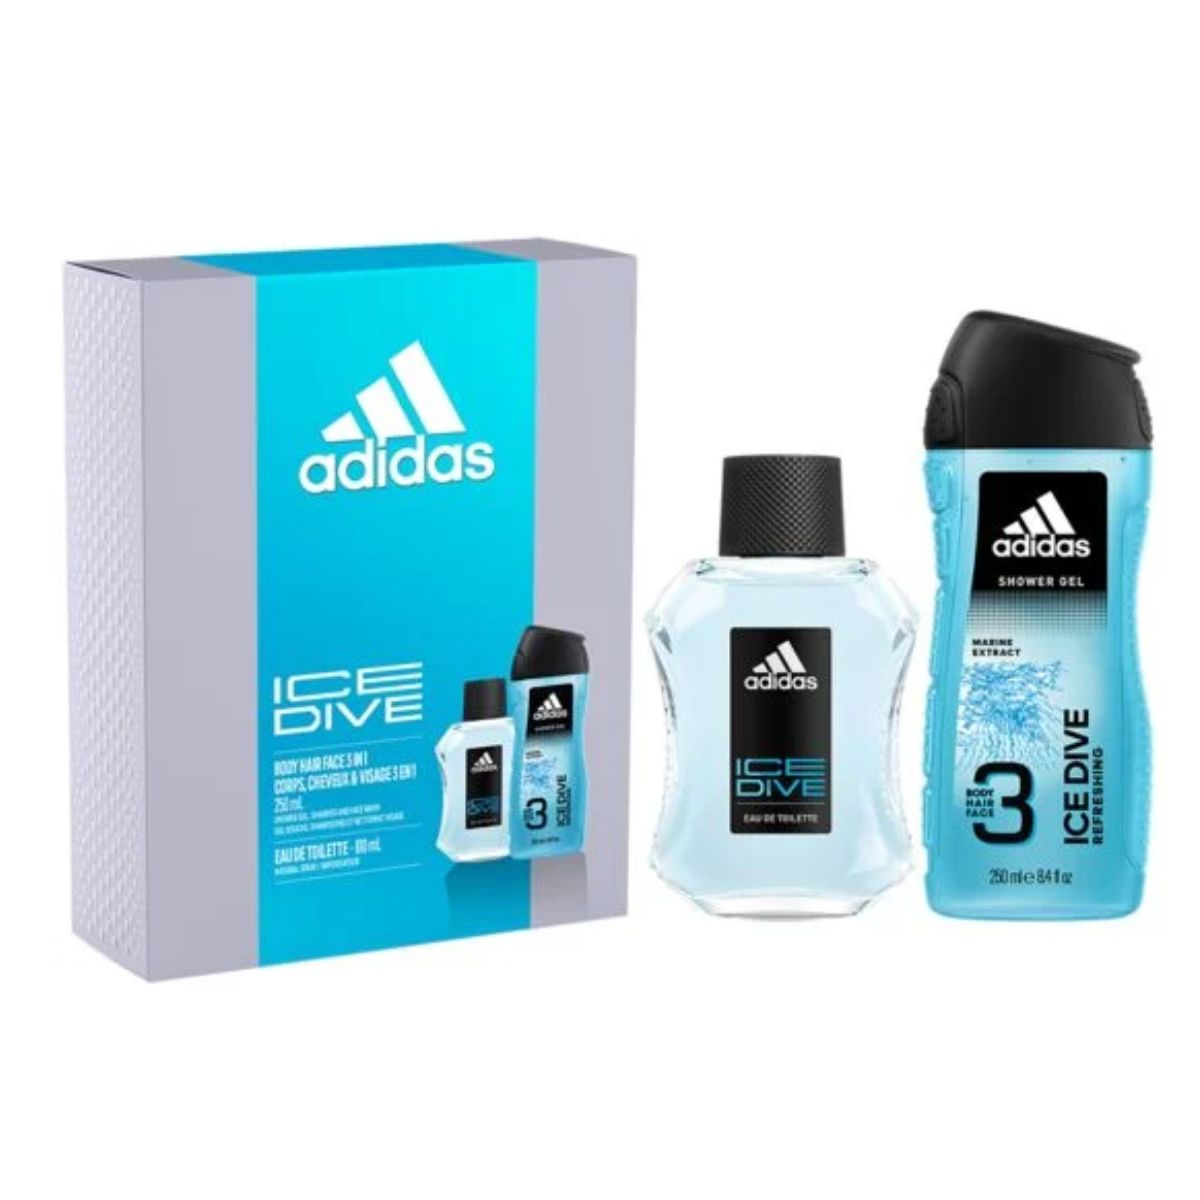 Adidas Ice Dive Edition Set.